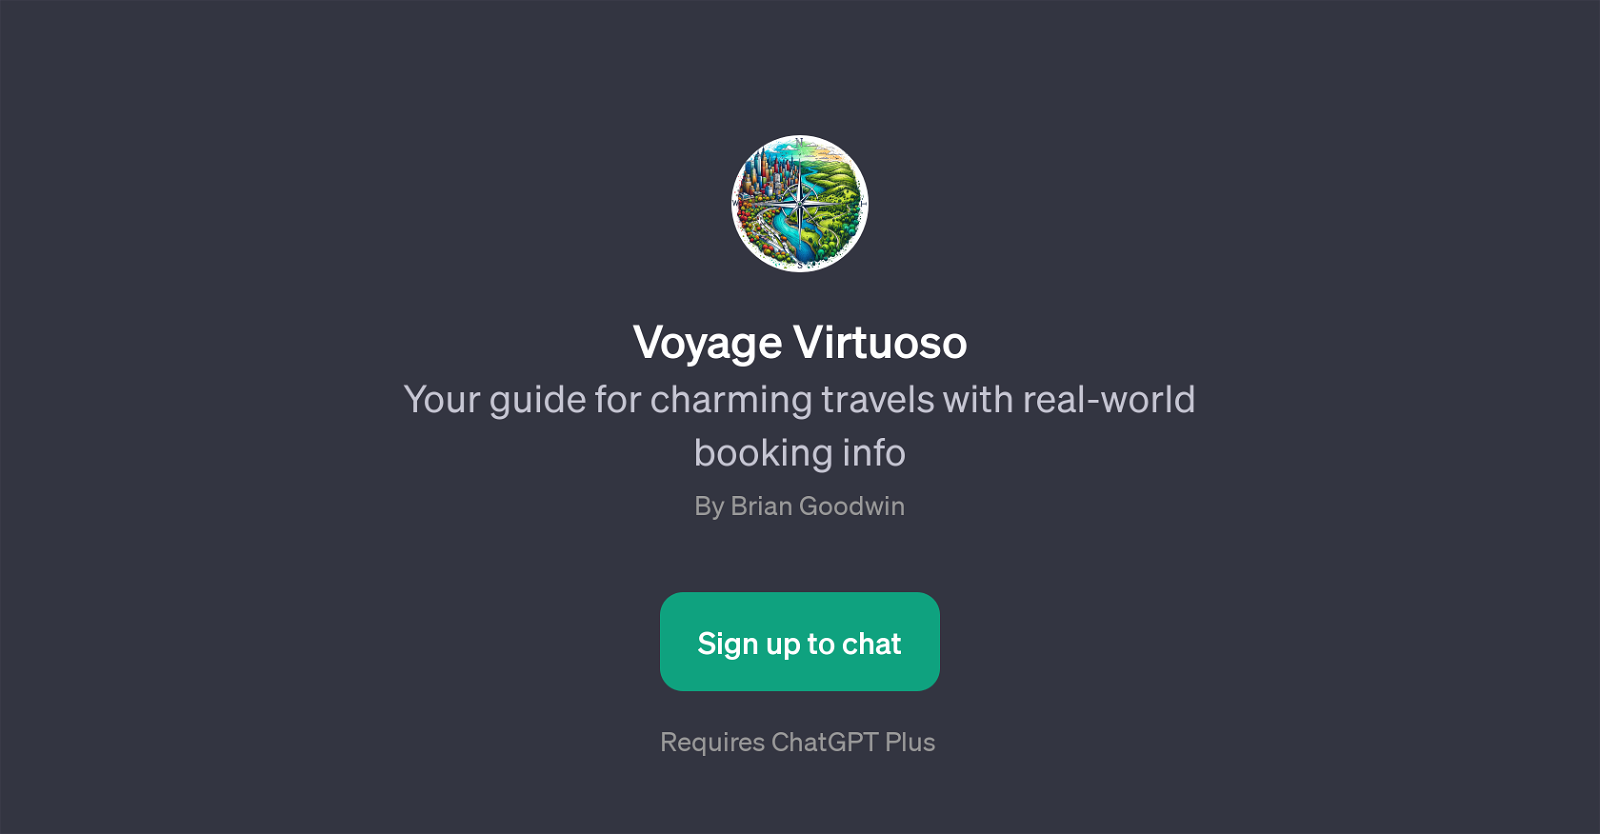 Voyage Virtuoso website